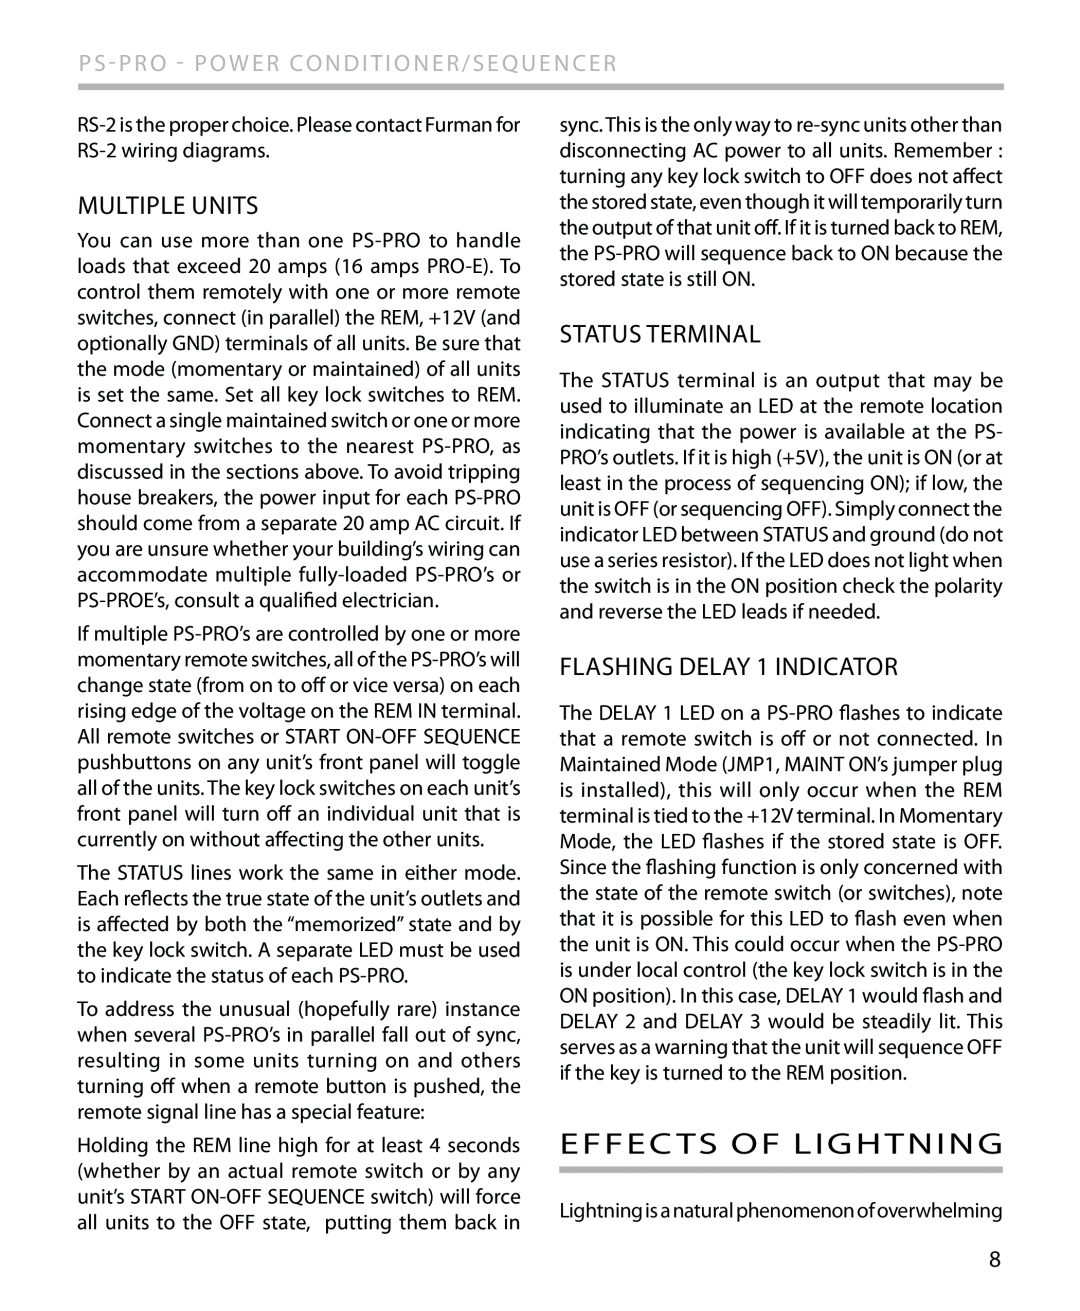 Furman Sound PS-PRO manual Effects Of Lightning, Multiple Units, Status Terminal, FLASHING DELAY 1 INDICATOR 